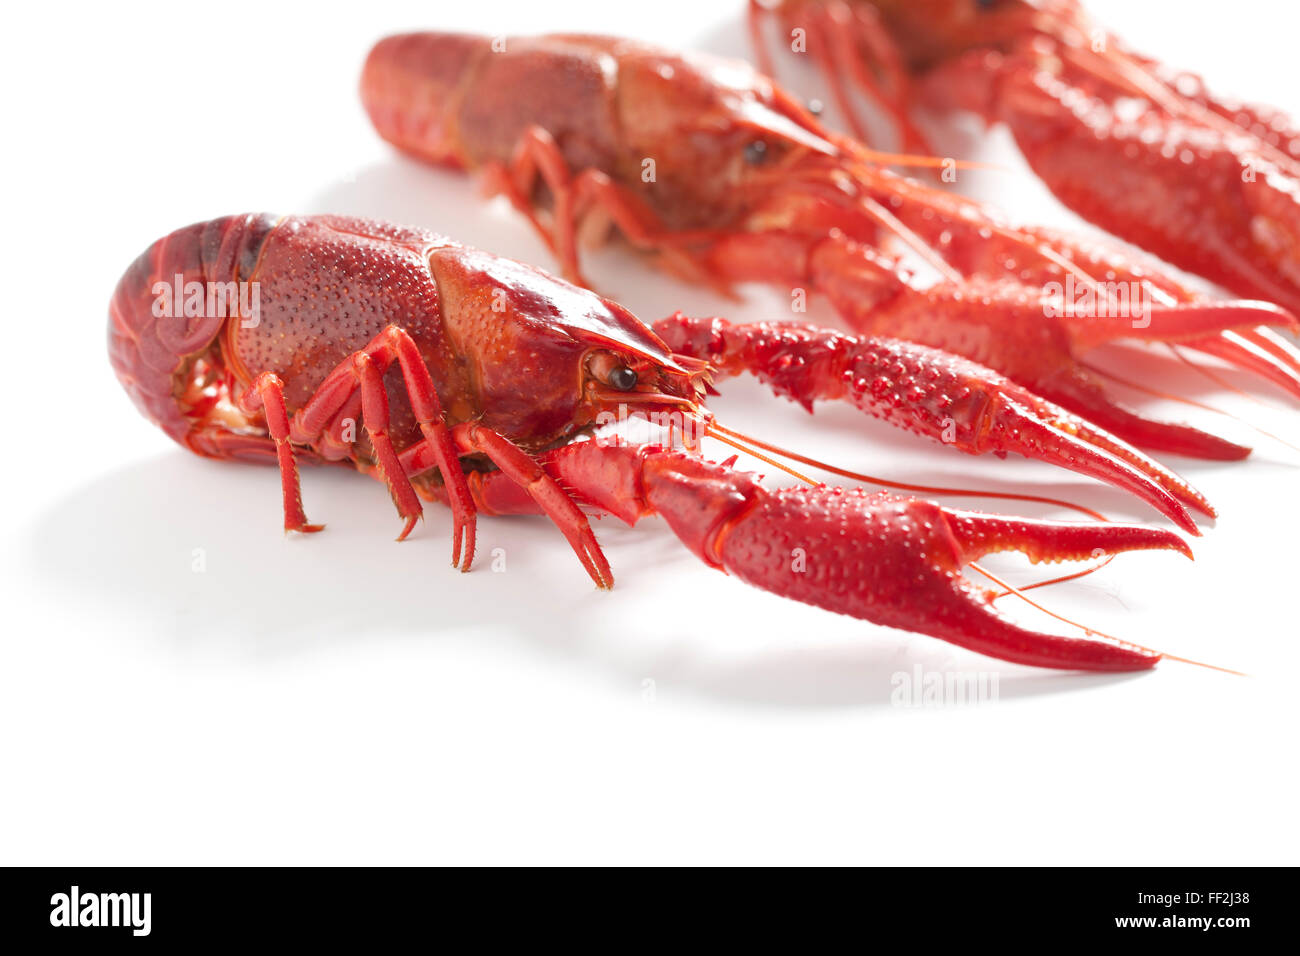 Cooked freshwater crayfishes on white background Stock Photo